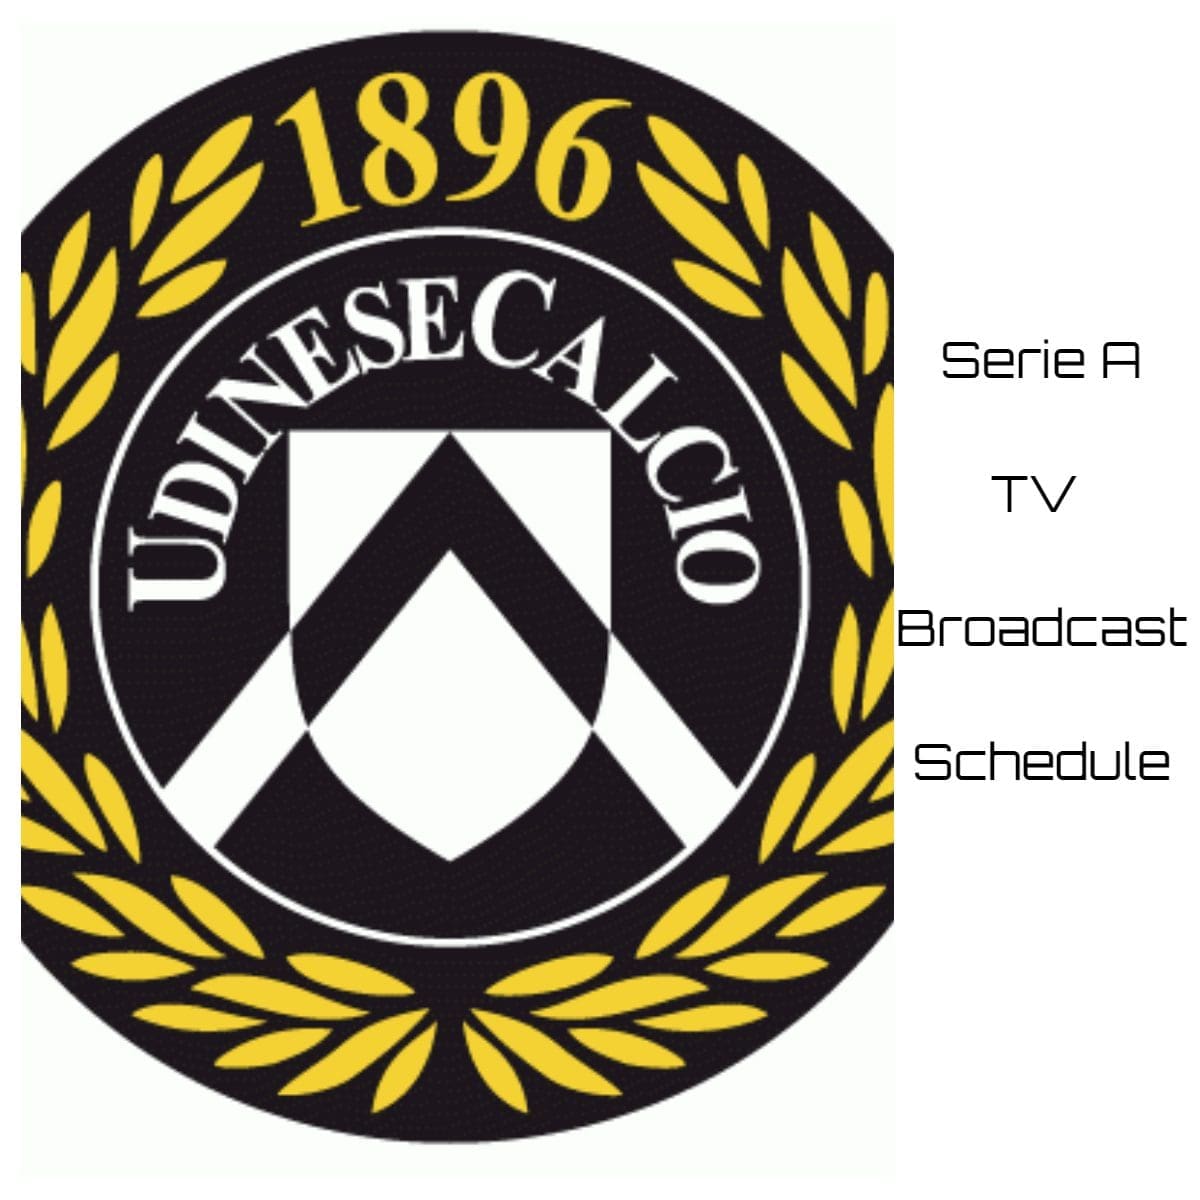 Udinese TV Broadcast Schedule